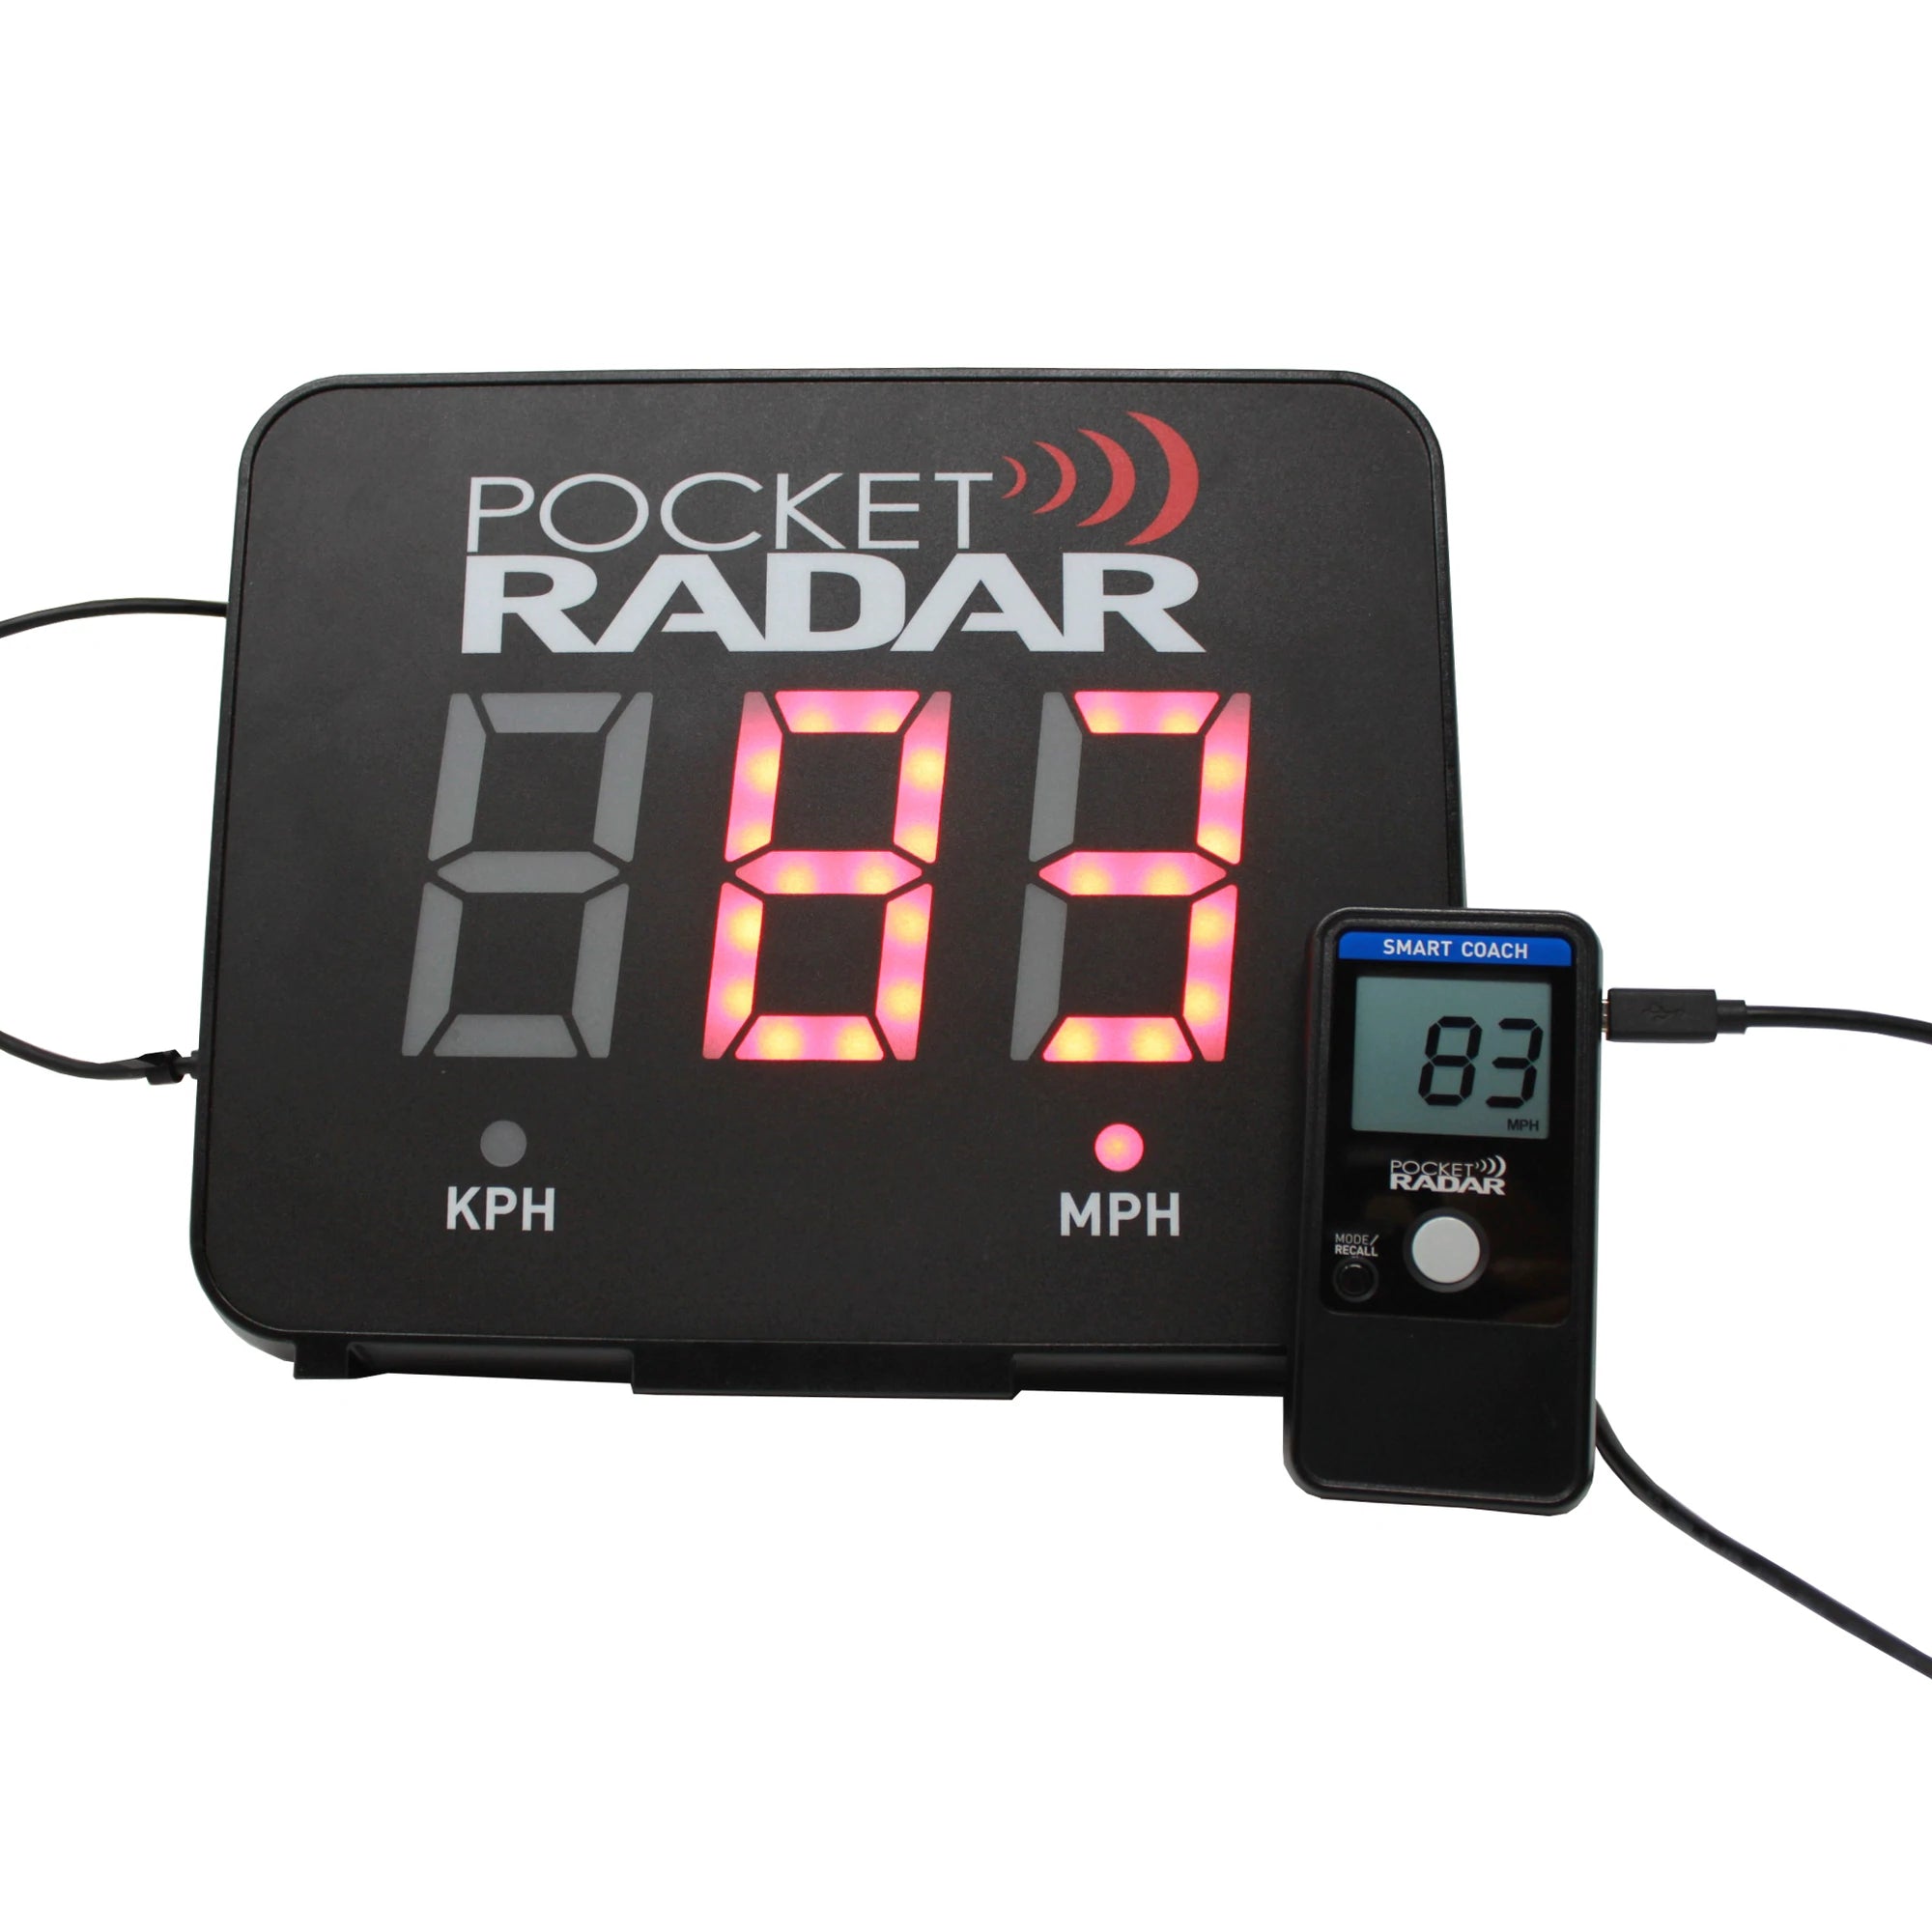 Smart Display for Smart Coach Pocket Radar Attached